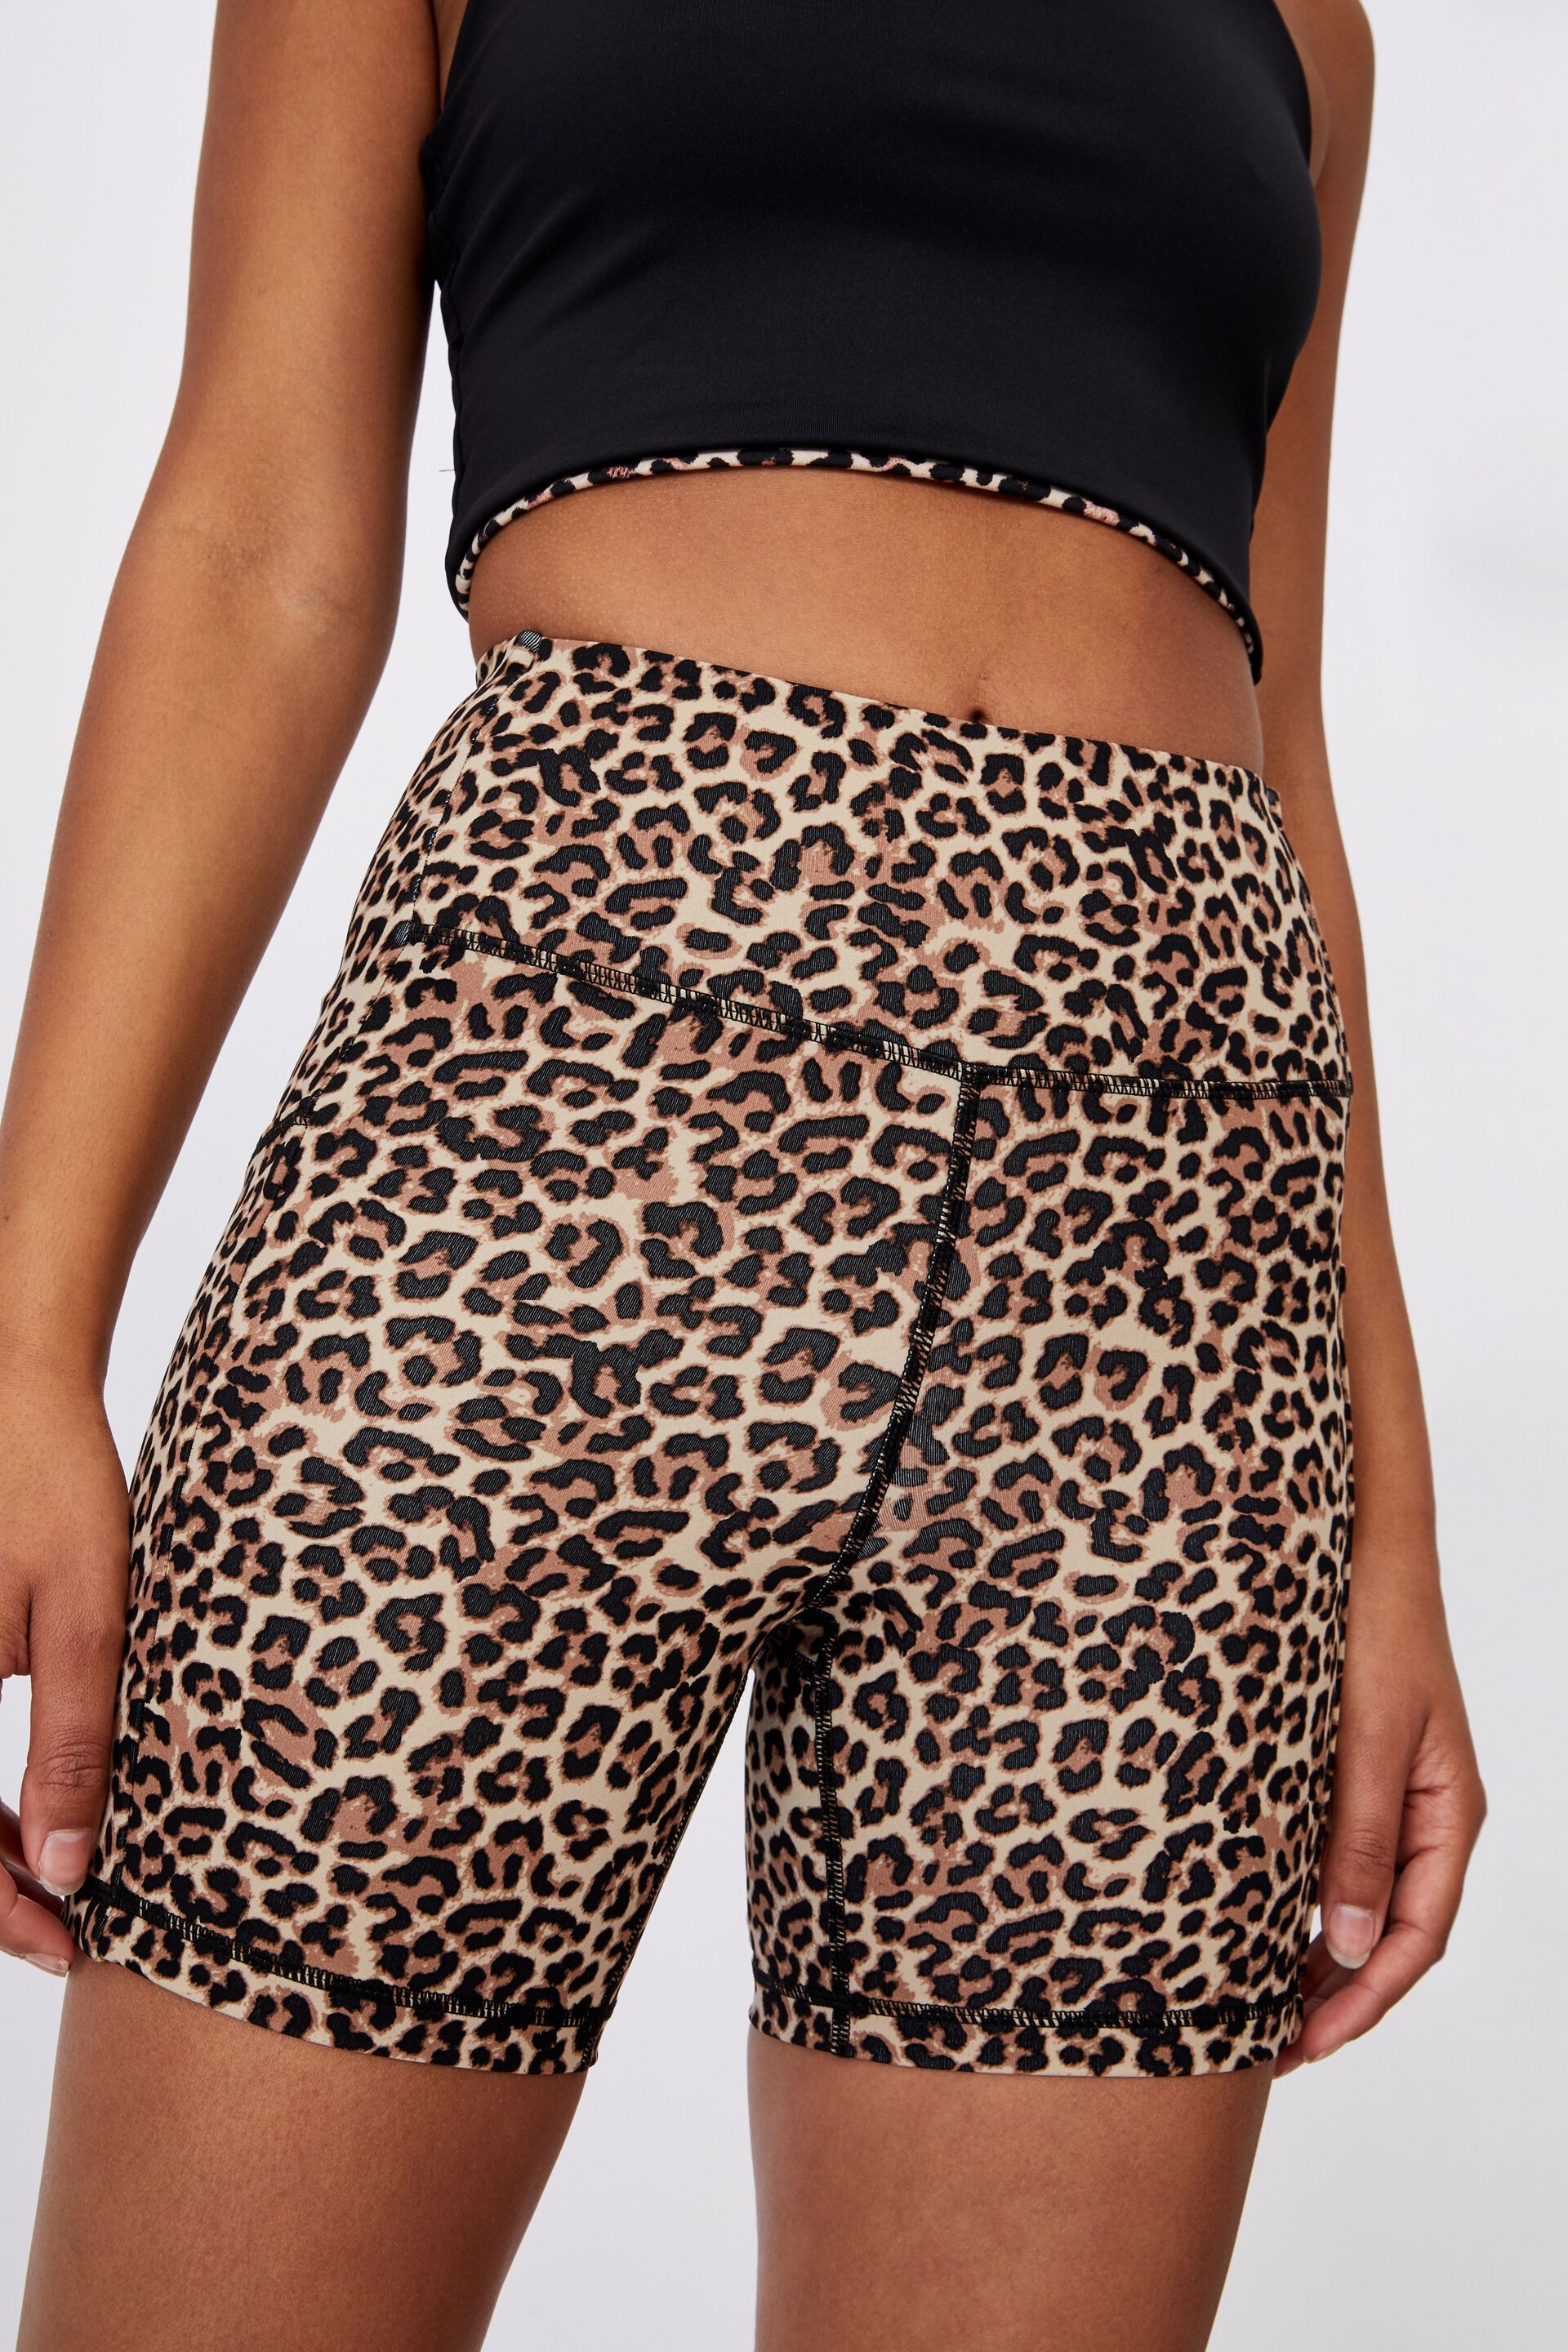 leopard print bike shorts cotton on